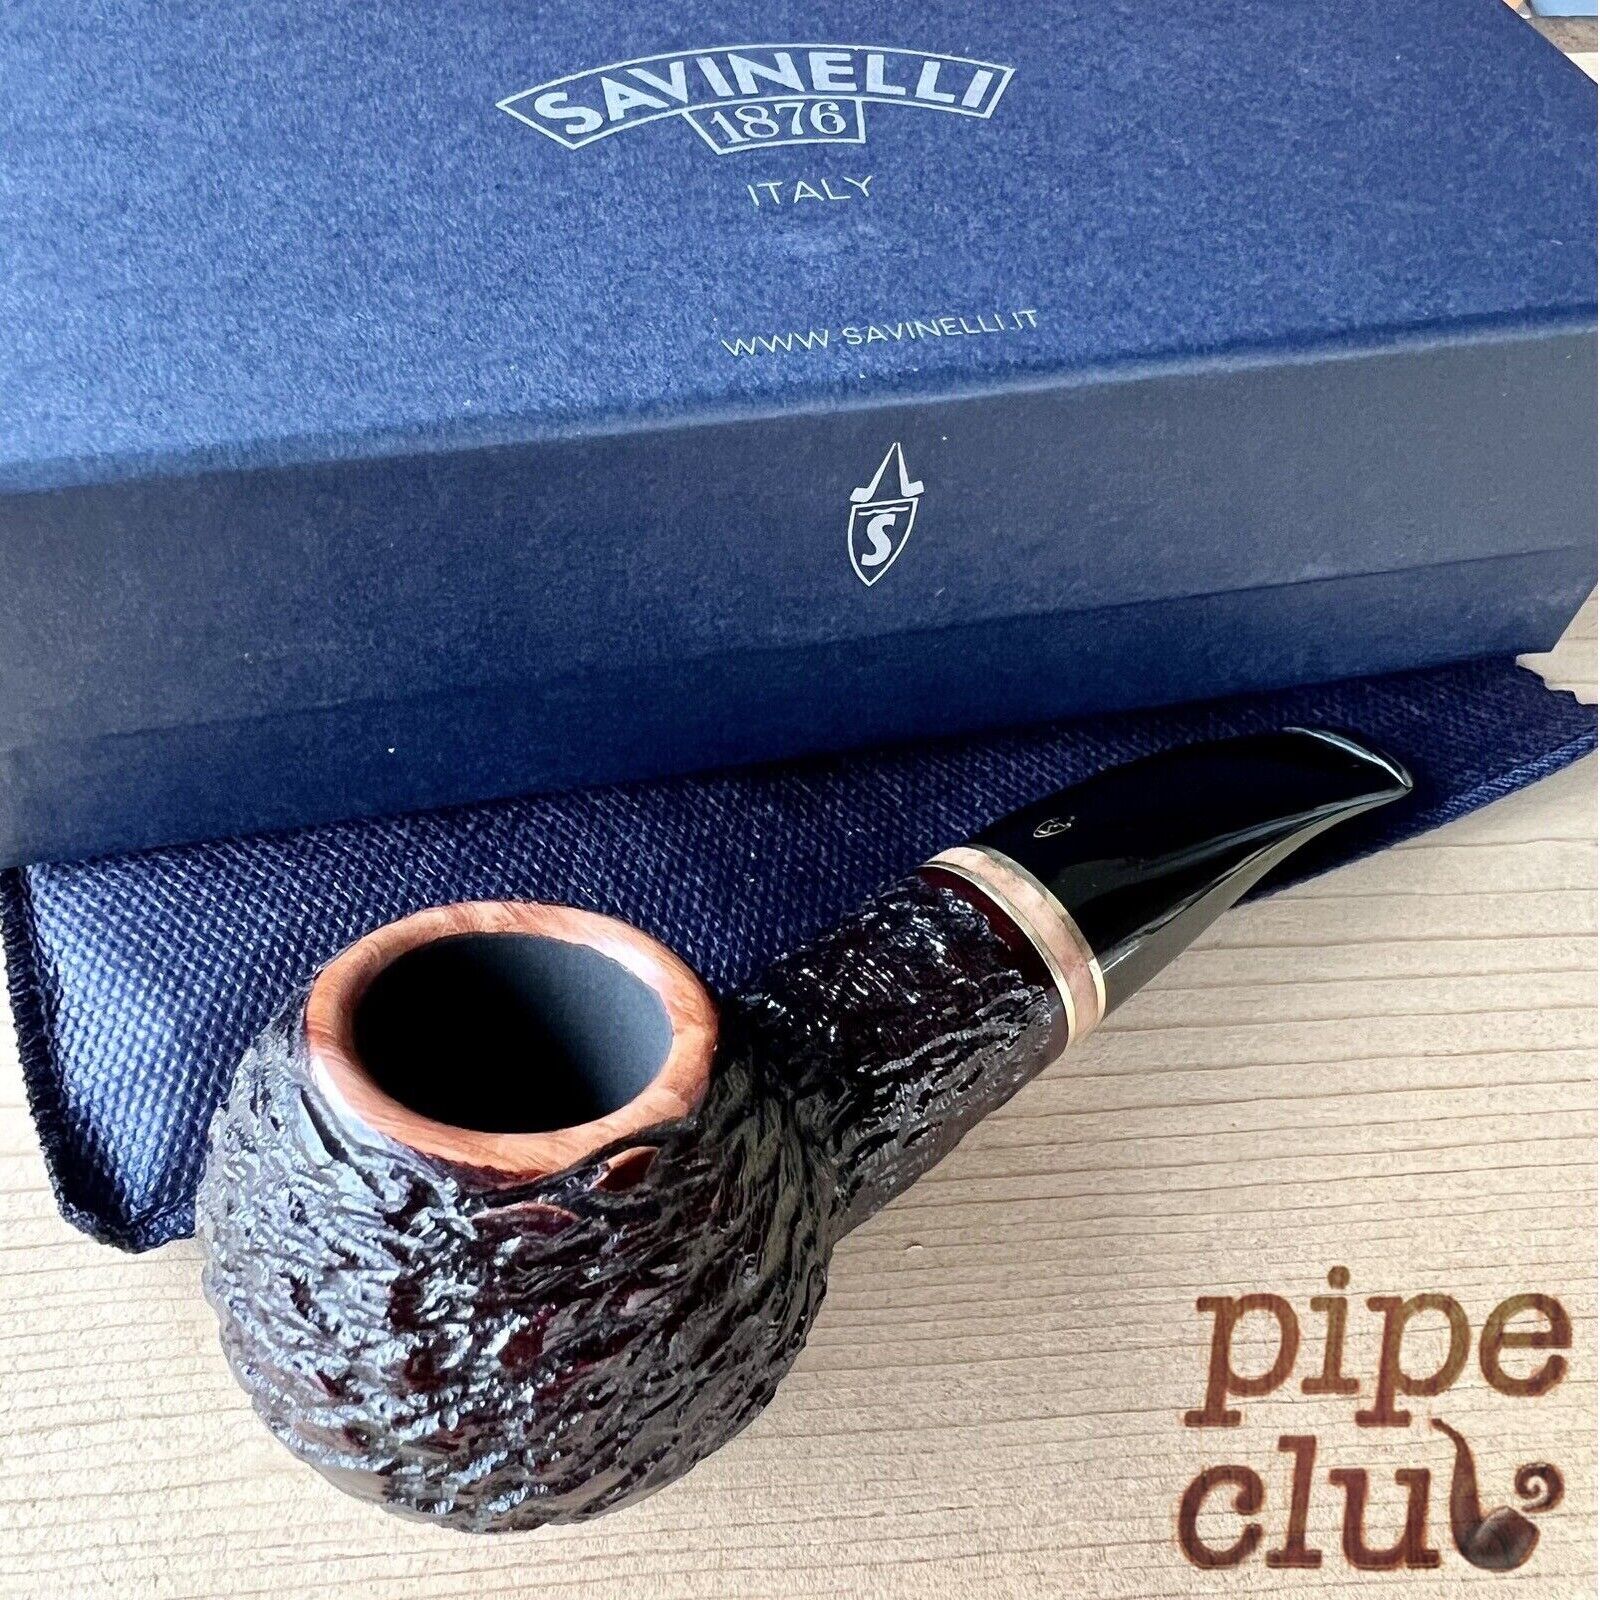 Savinelli Porto Cervo Rusticated Author (320 KS) 6mm Filter Tobacco Pipe - NEW